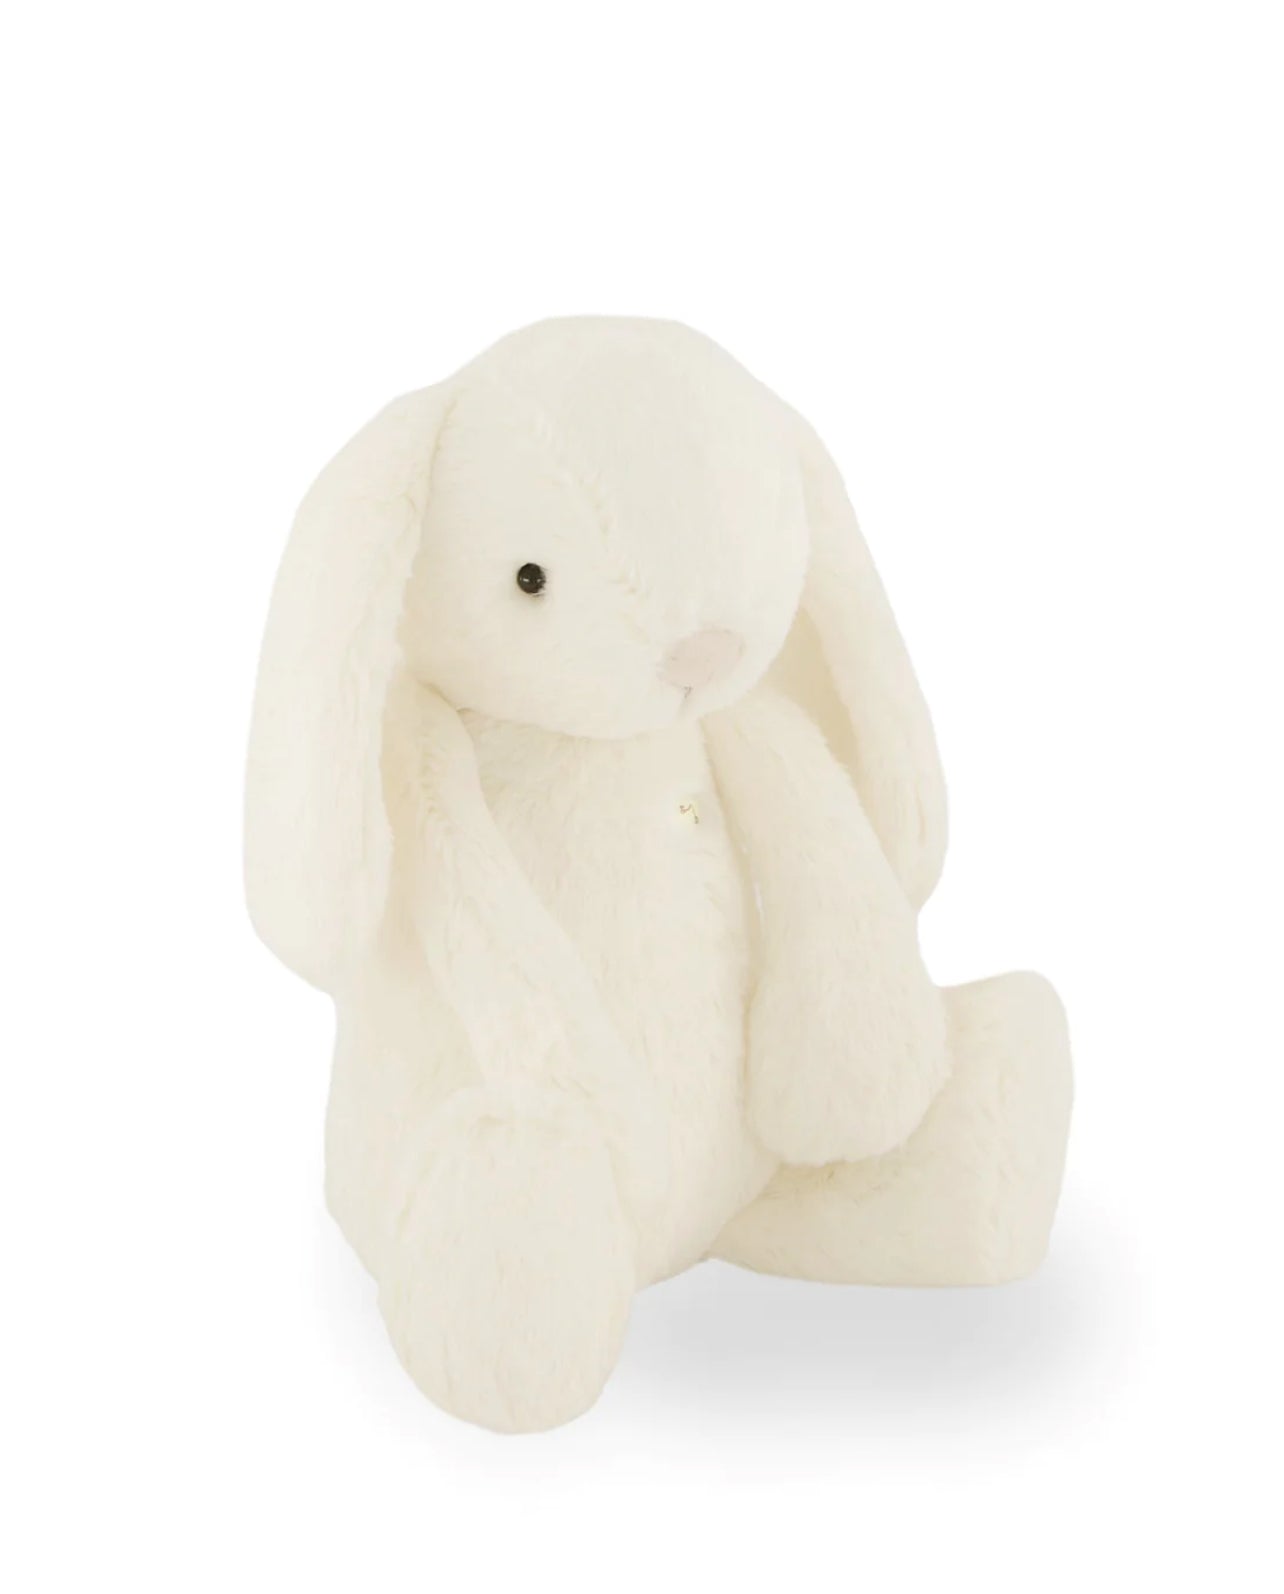 Penelope The Bunny - Marshmallow